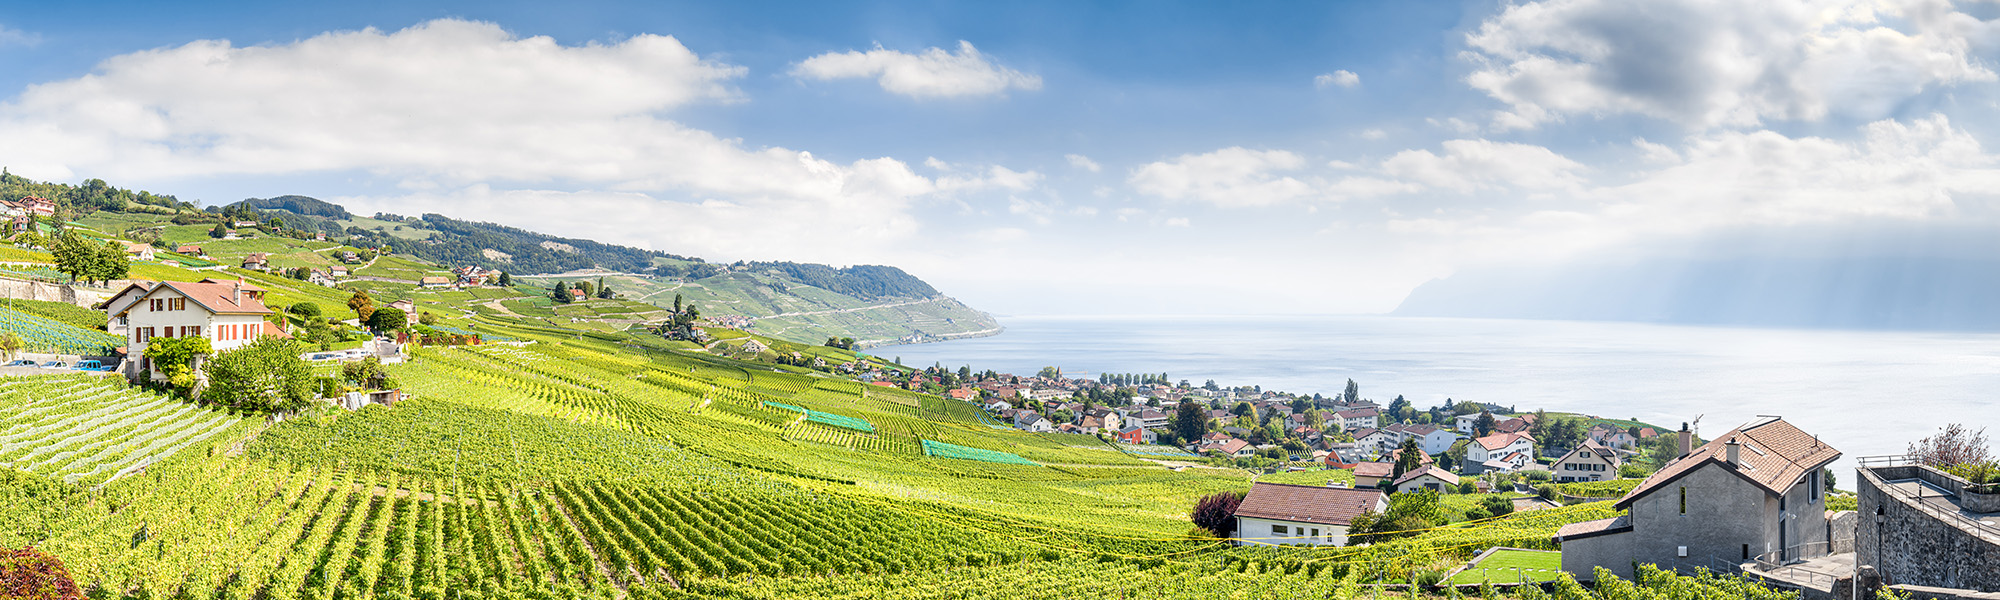 Swiss “IrriSalgesch” project demonstrates water savings potential of AQUA4D® technology in irrigating vineyards